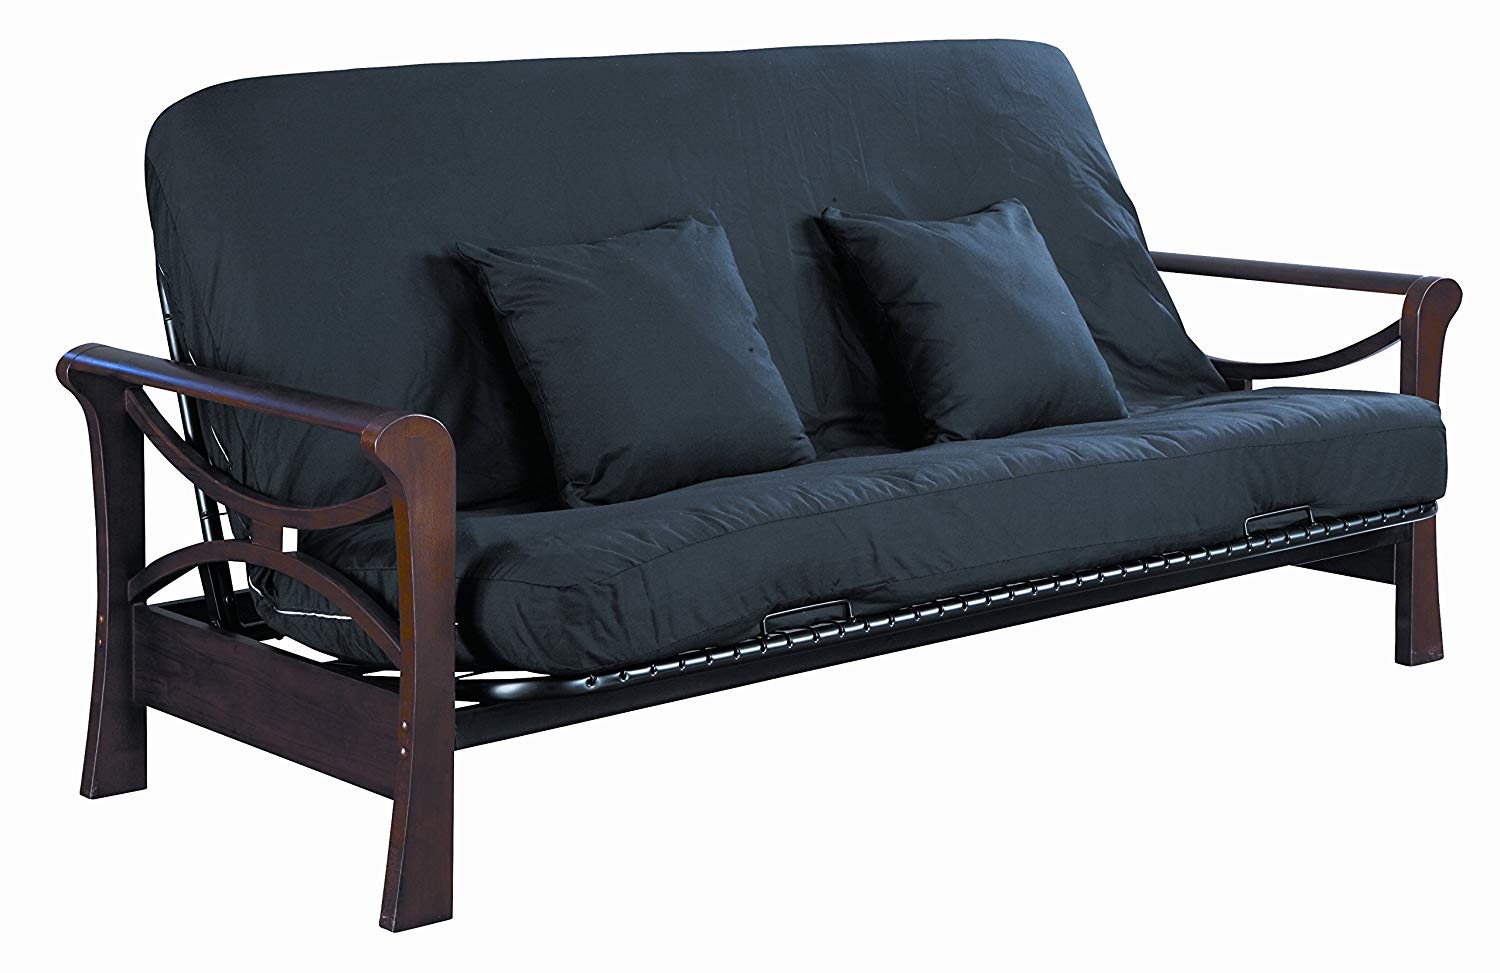 best foldable futon mattress